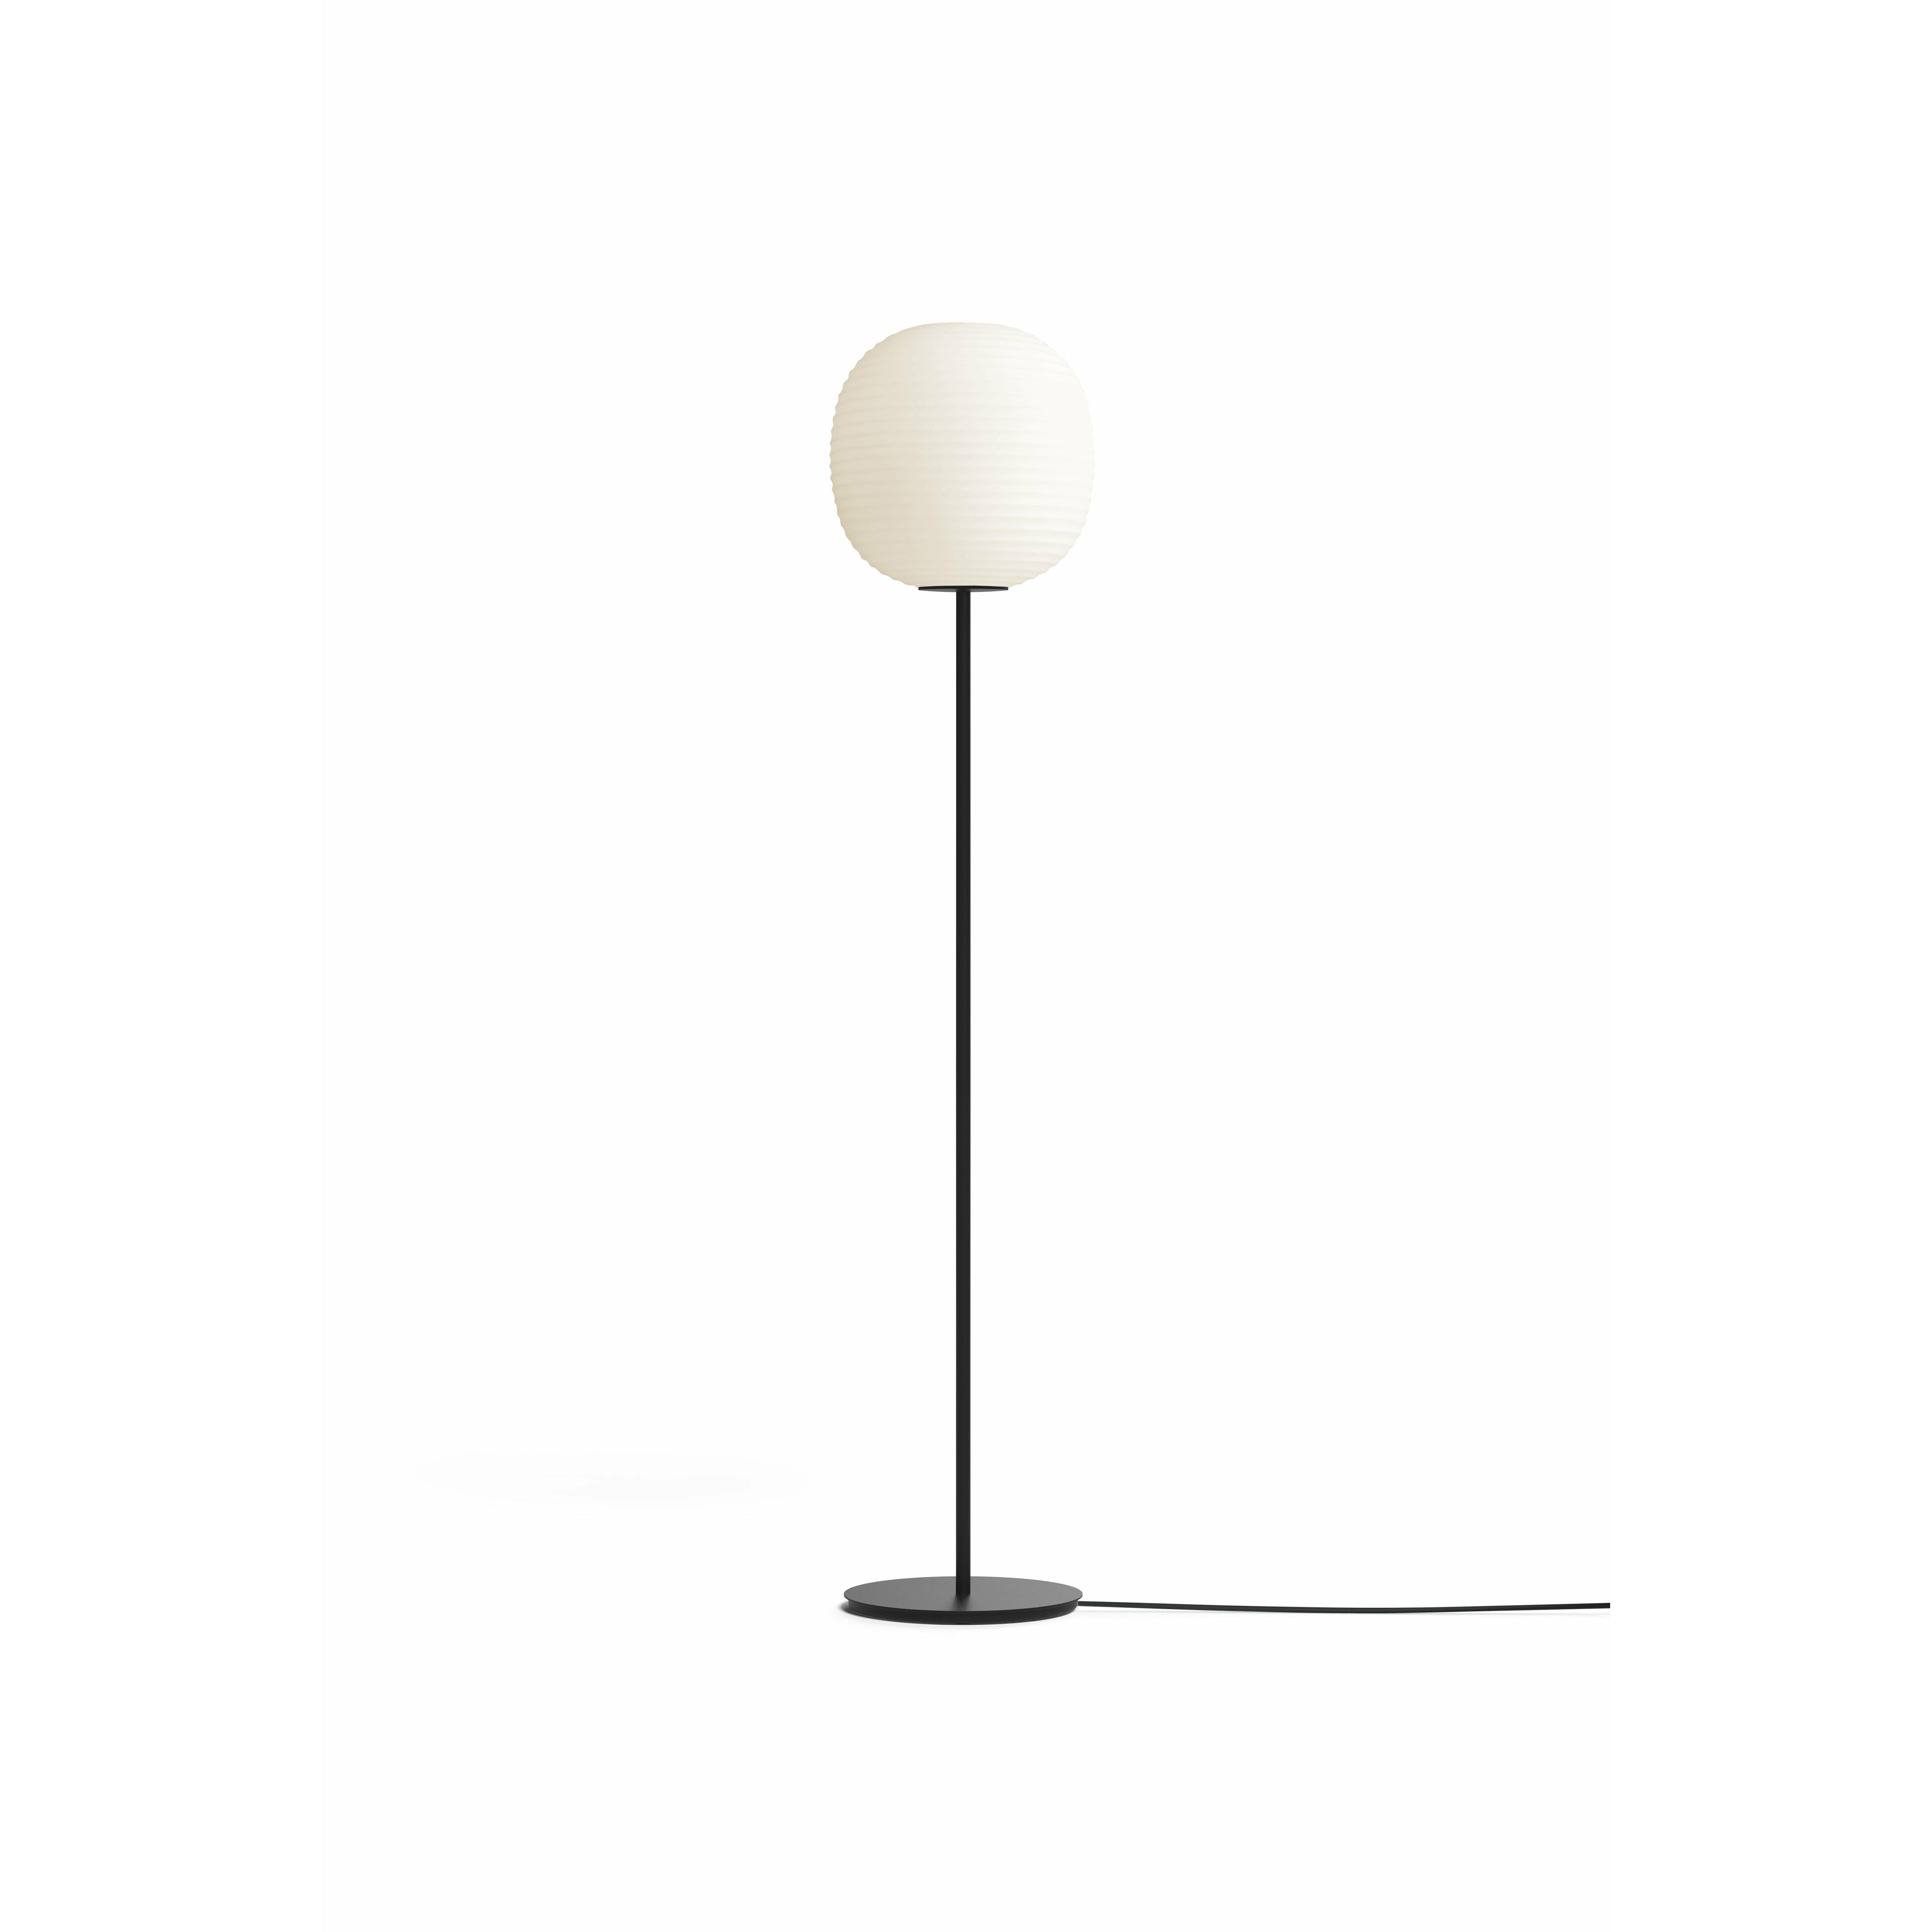 New Works Lantaarn vloerlamp, Ø30 cm